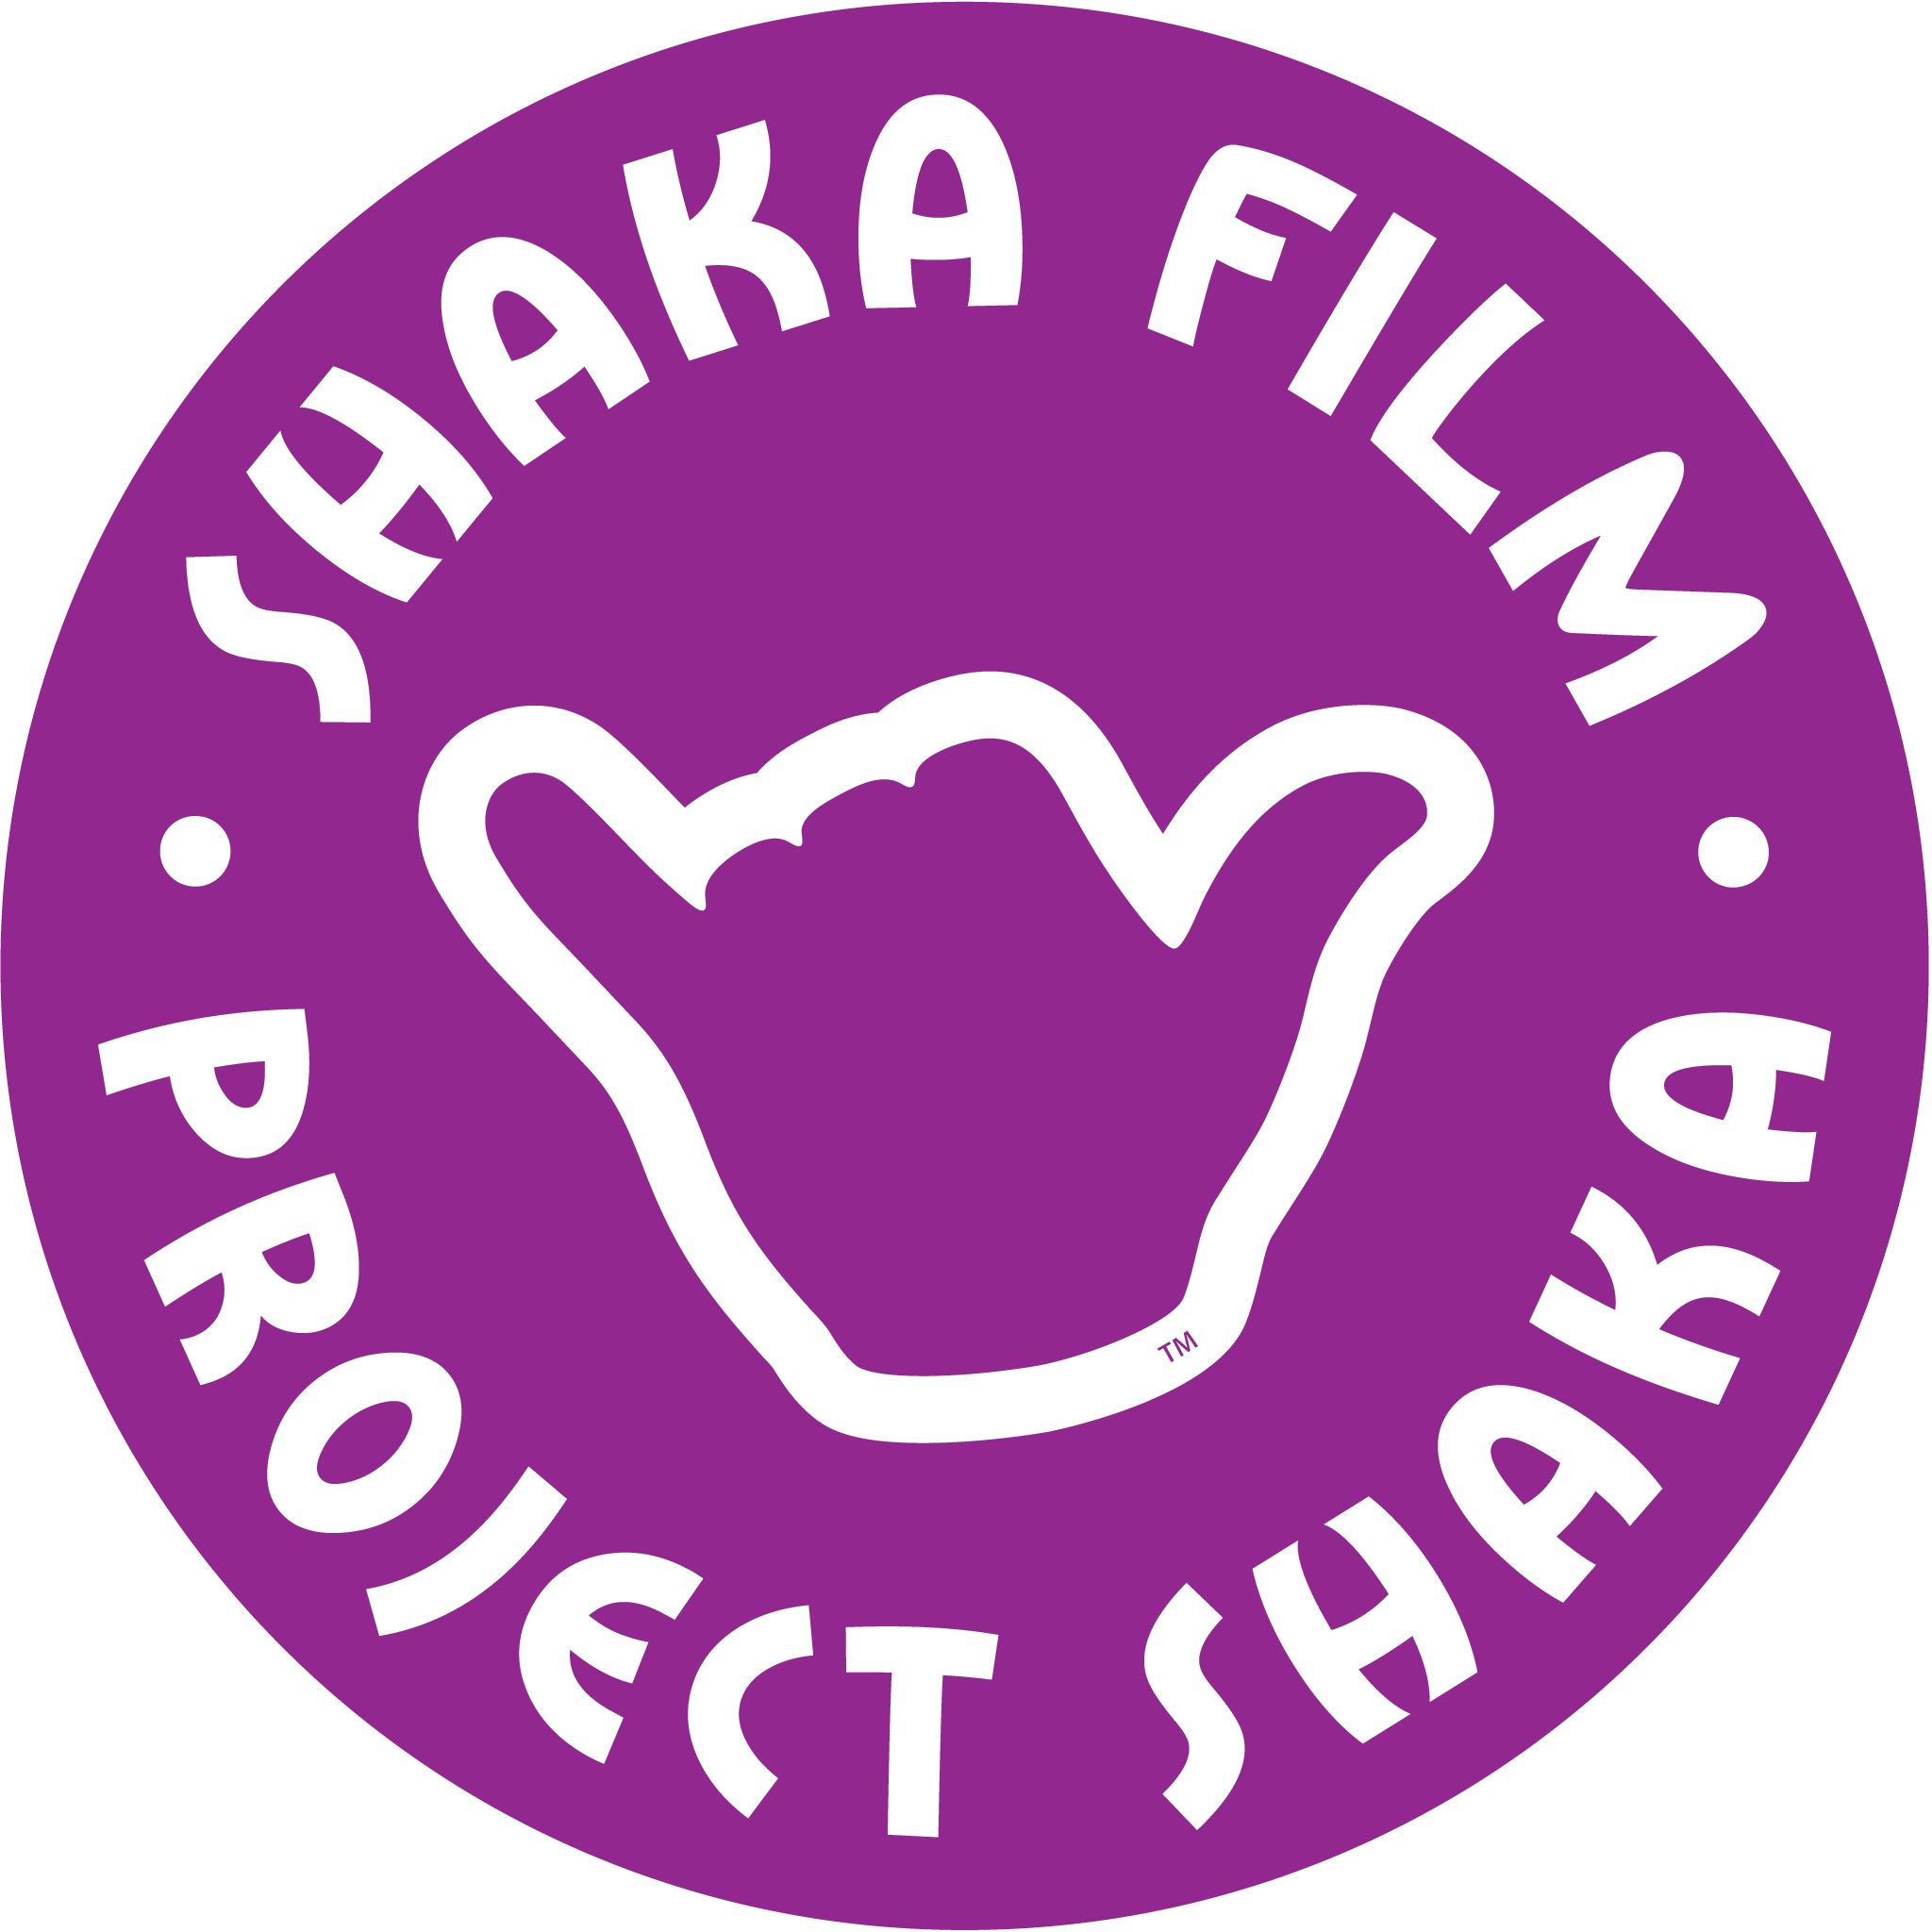 Project Shaka Logo